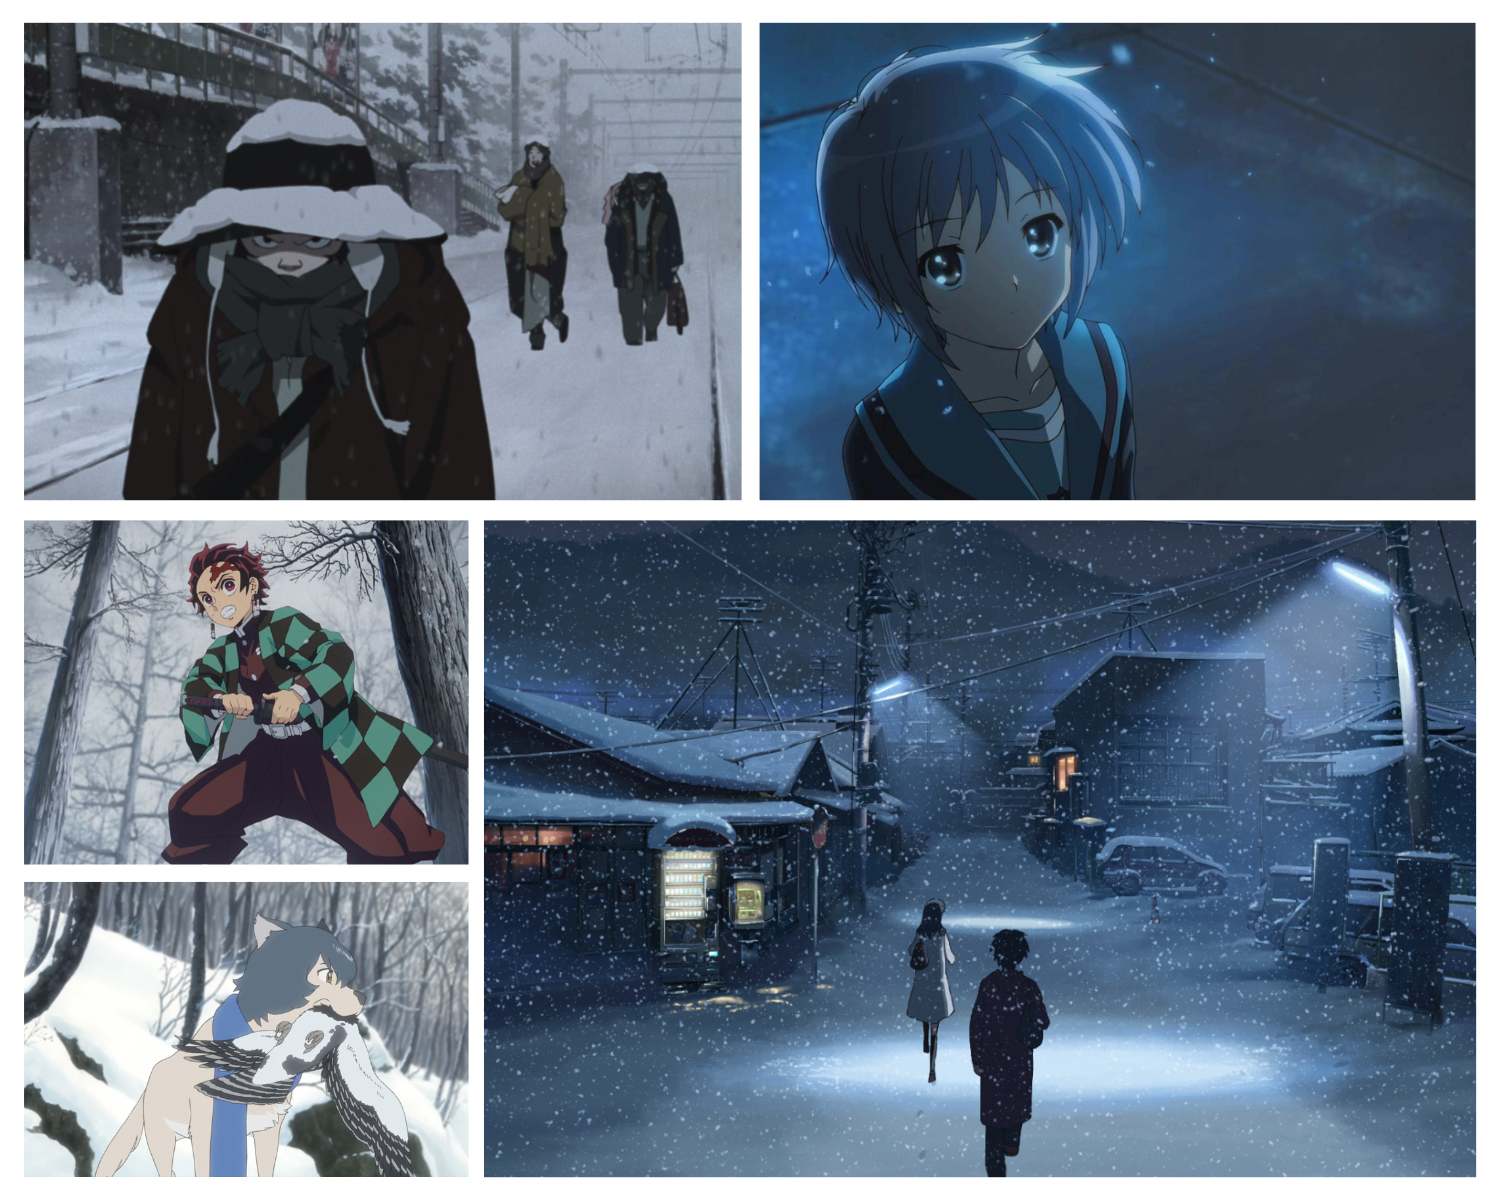 Snow-anime pop up around Japan after winter snowfalls - BBC News